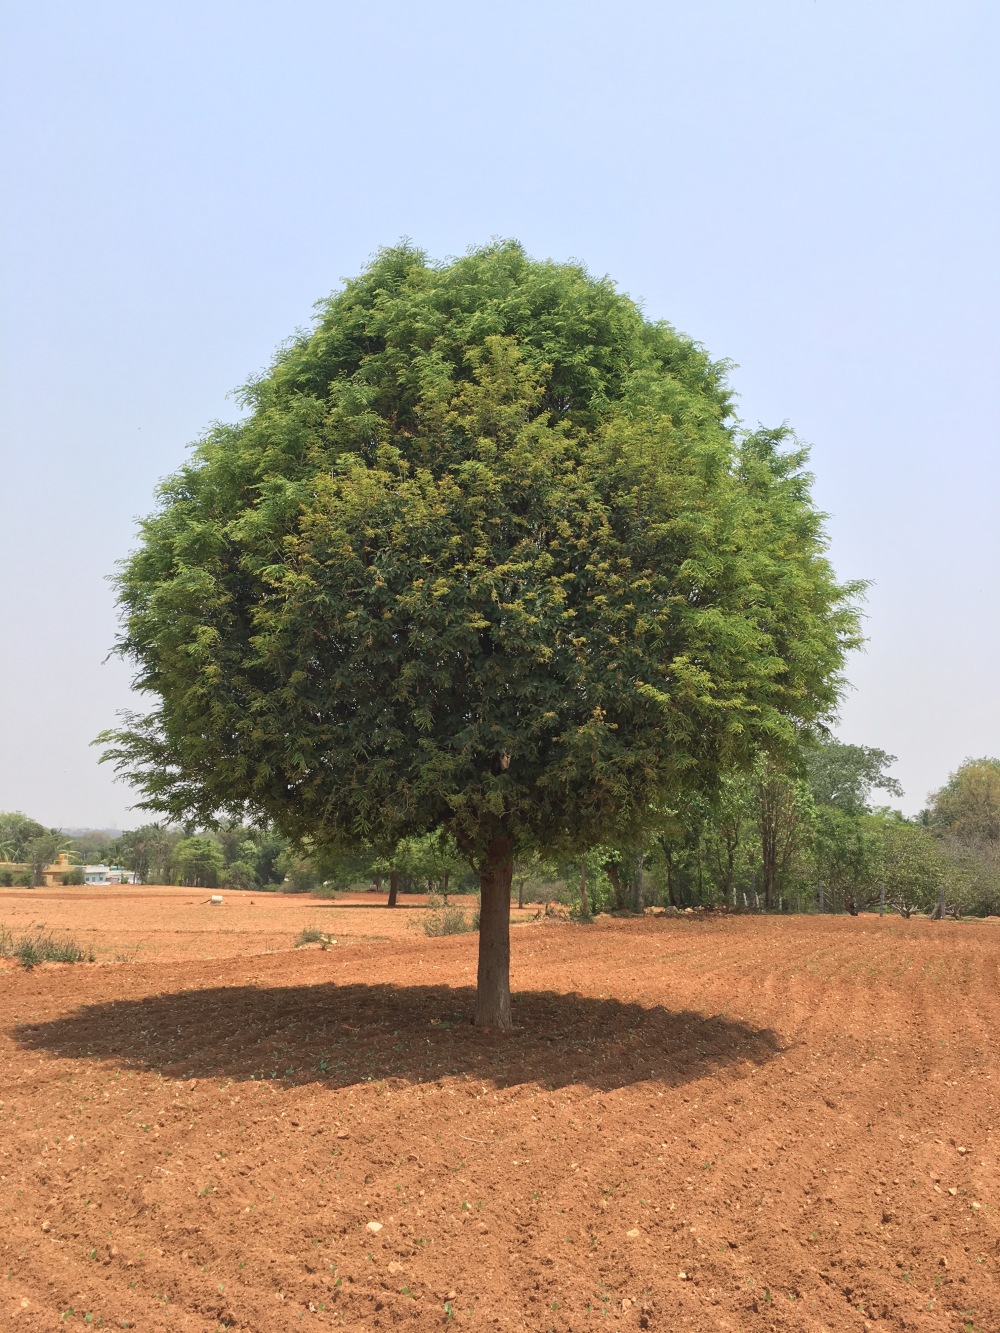 The Lone tree